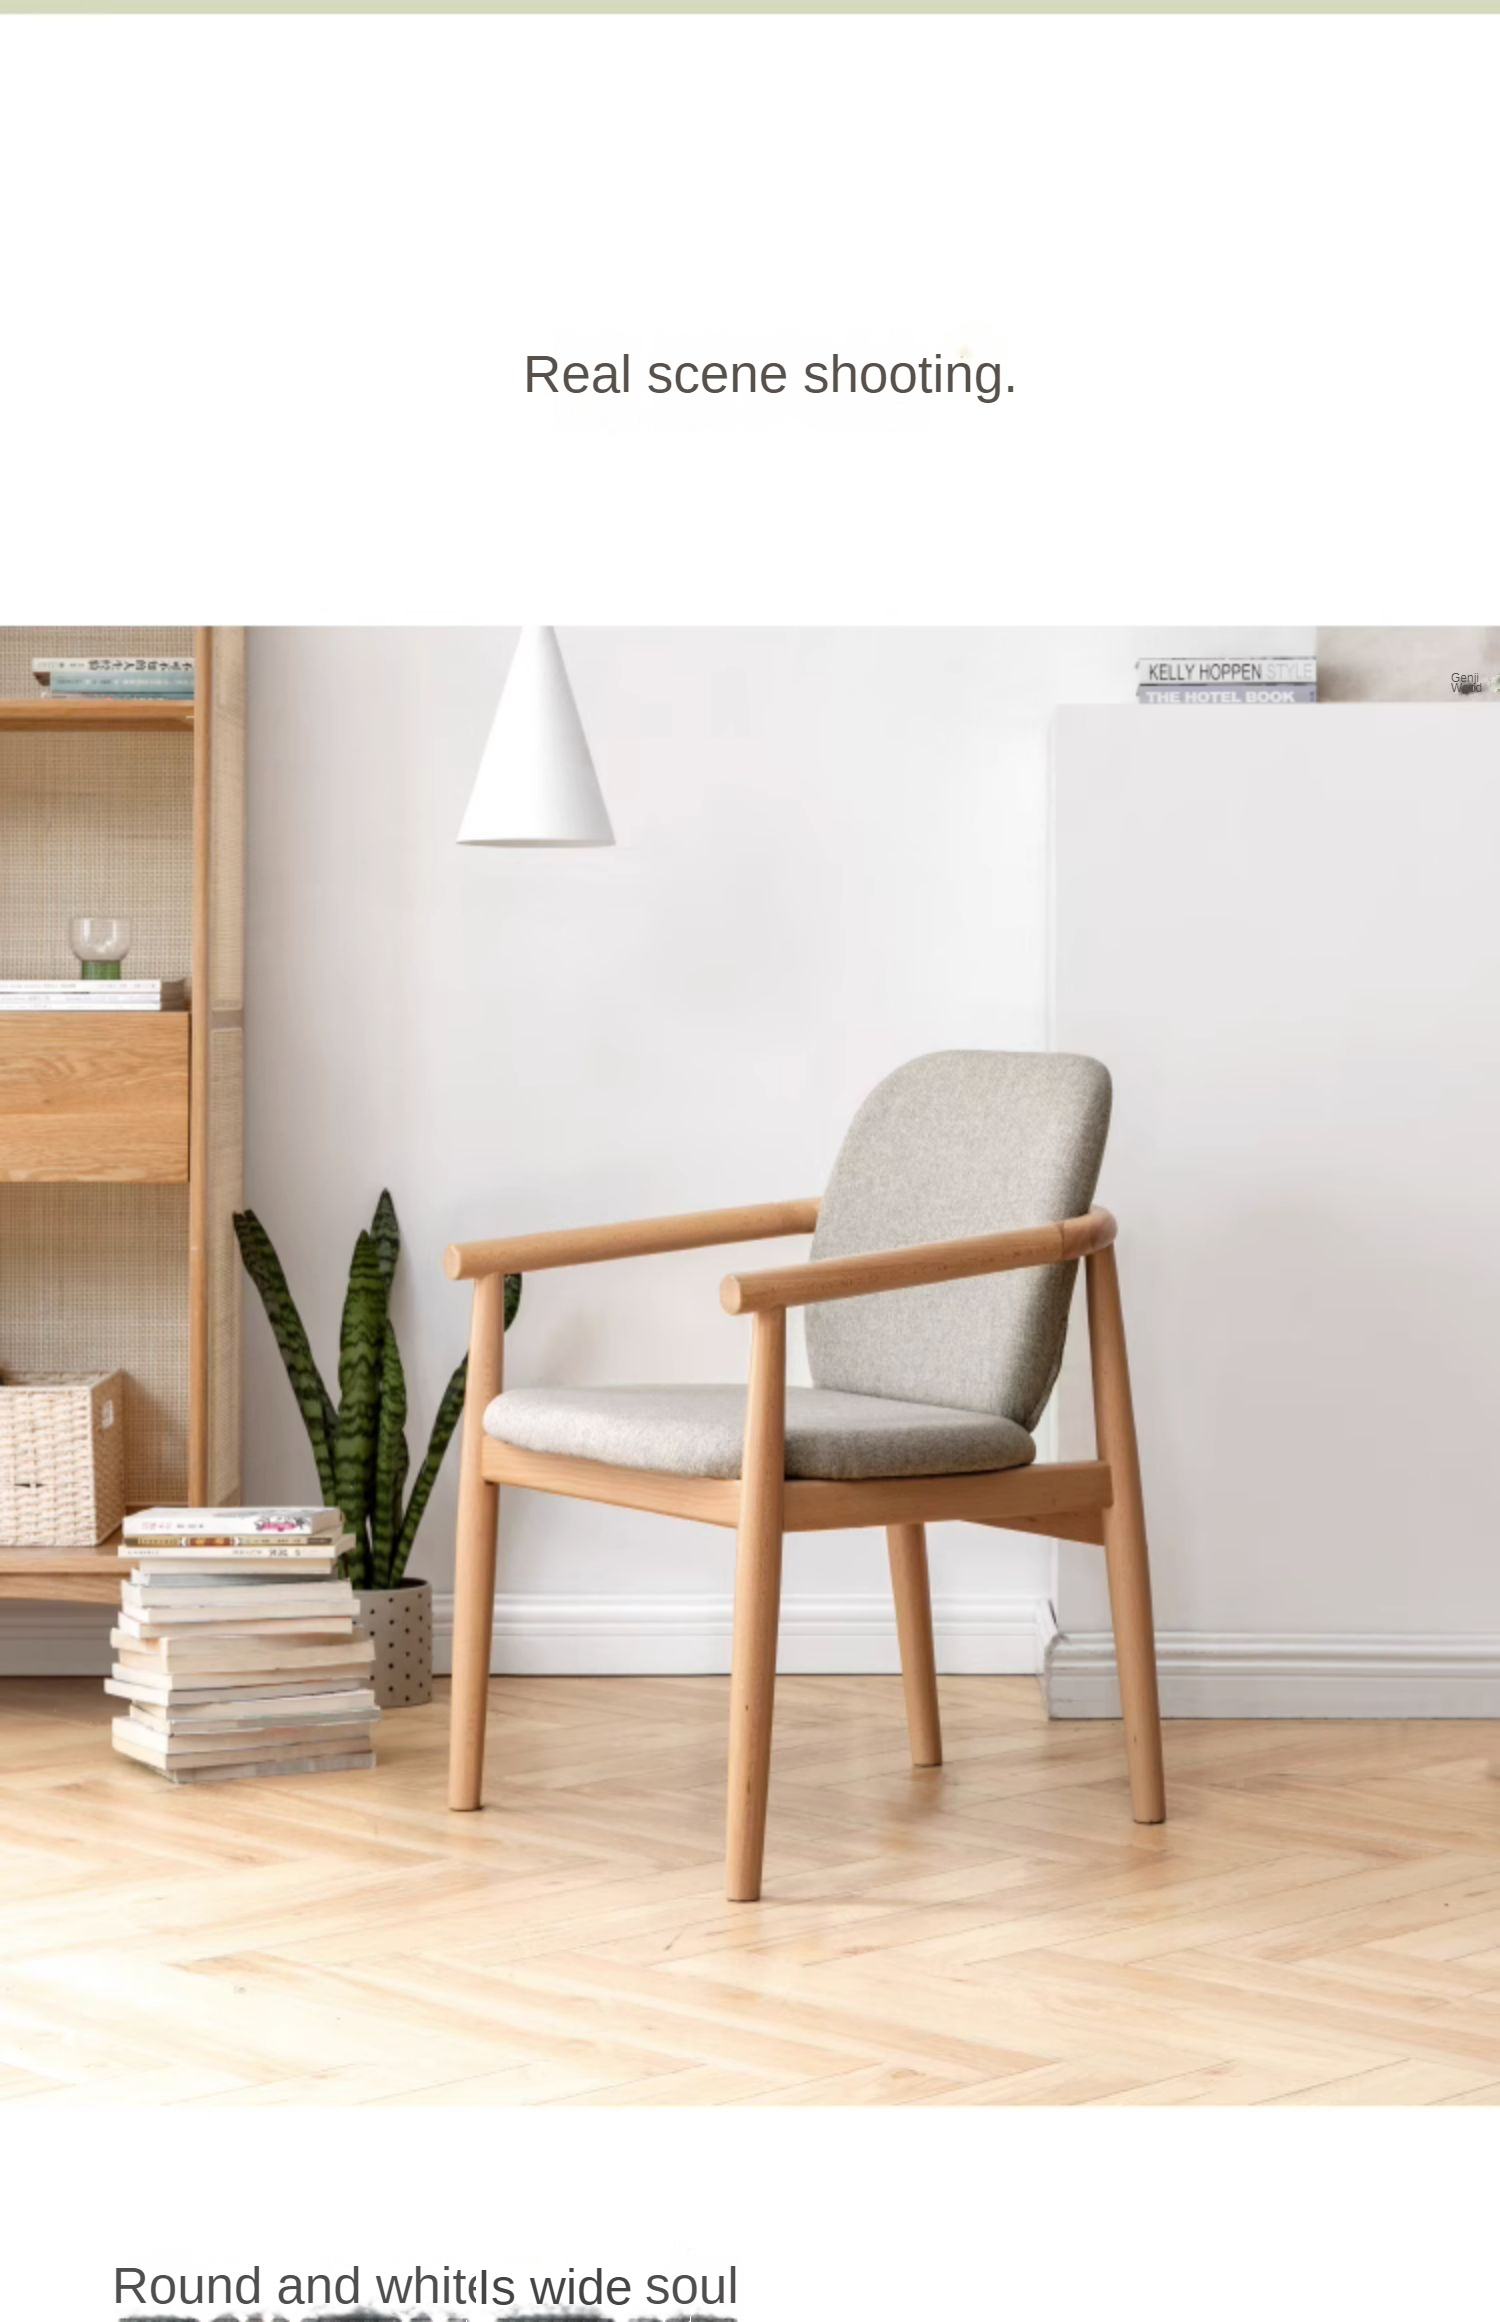 Beech solid wood armchair Nordic"